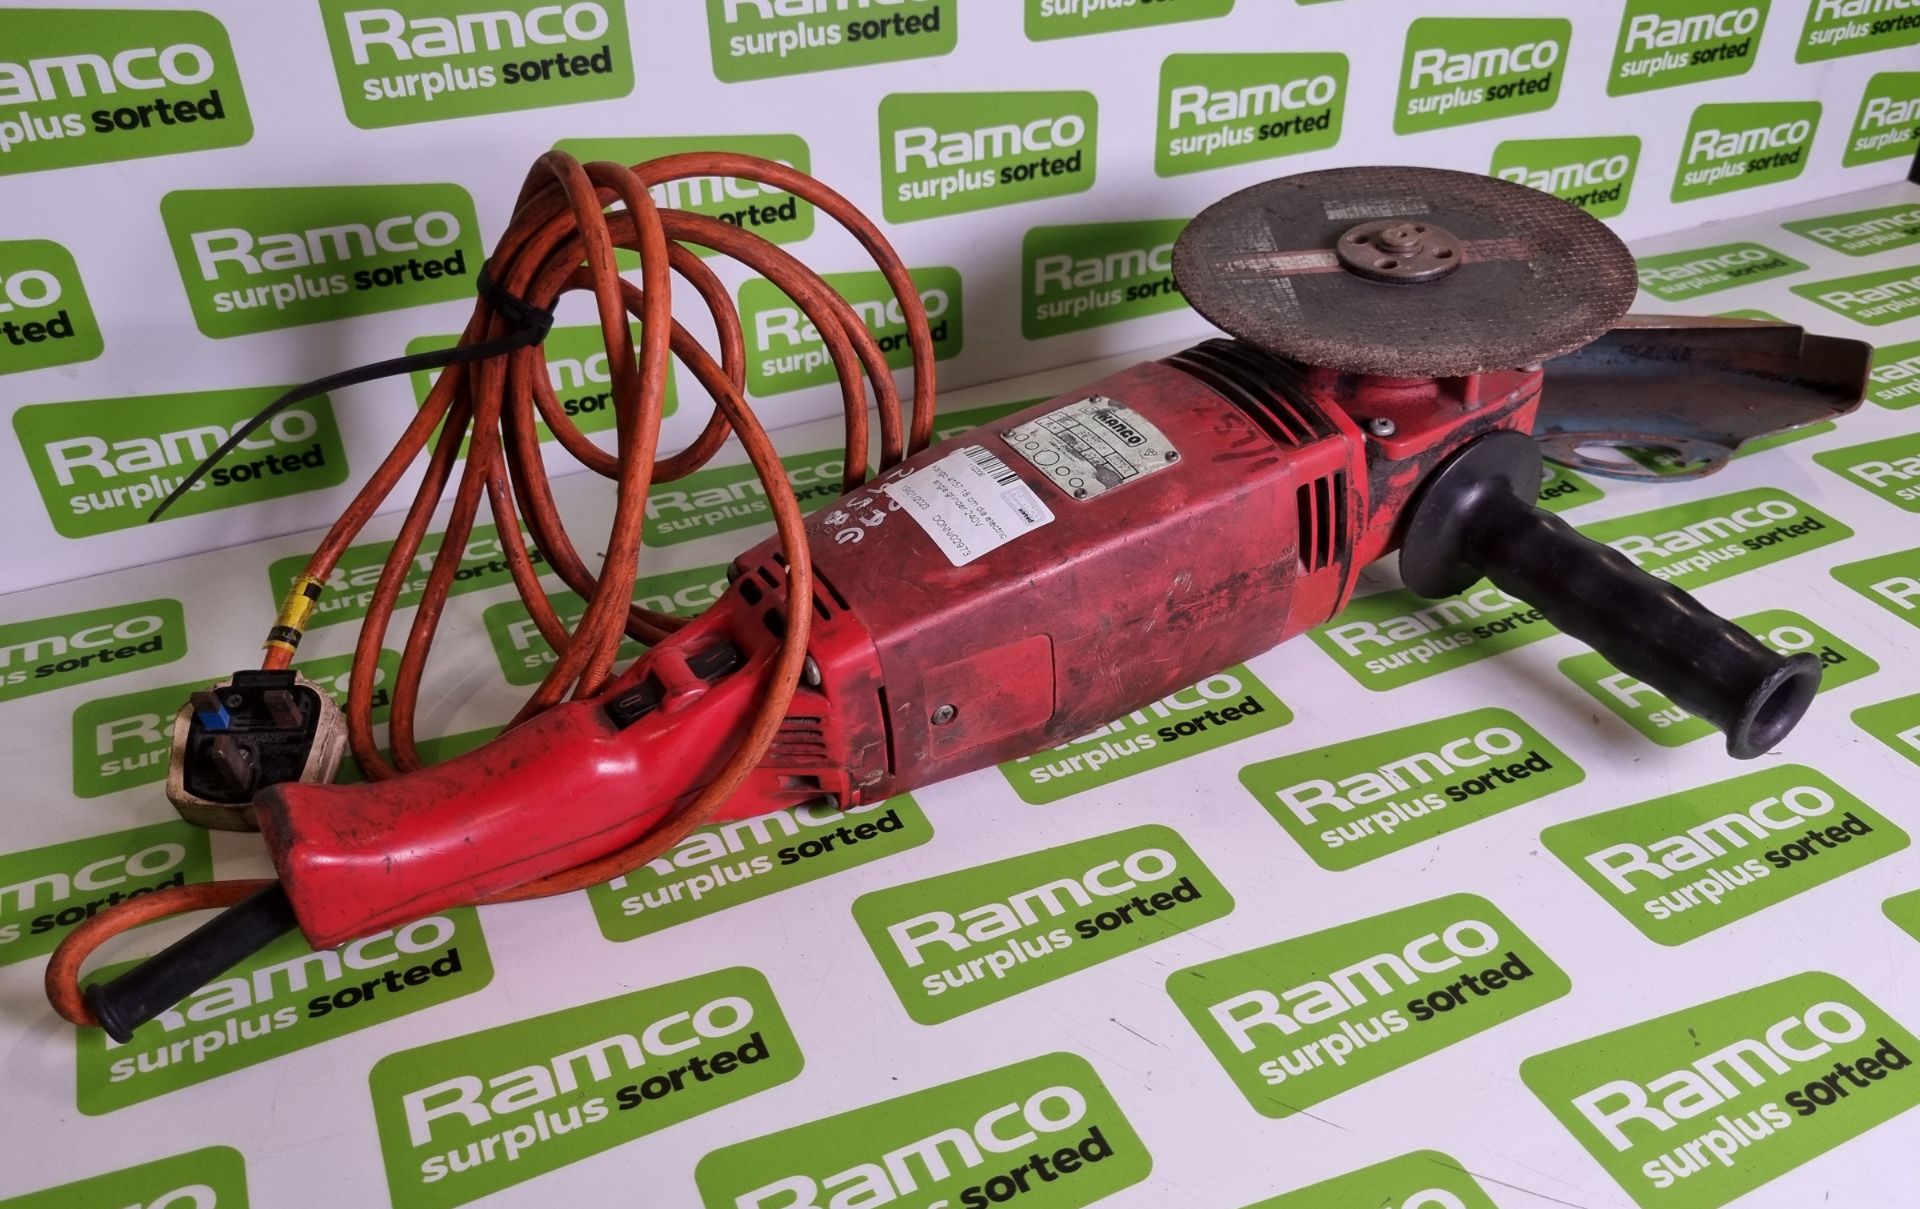 Kango 4157 18 cm dia electric angle grinder 240V - Image 4 of 5